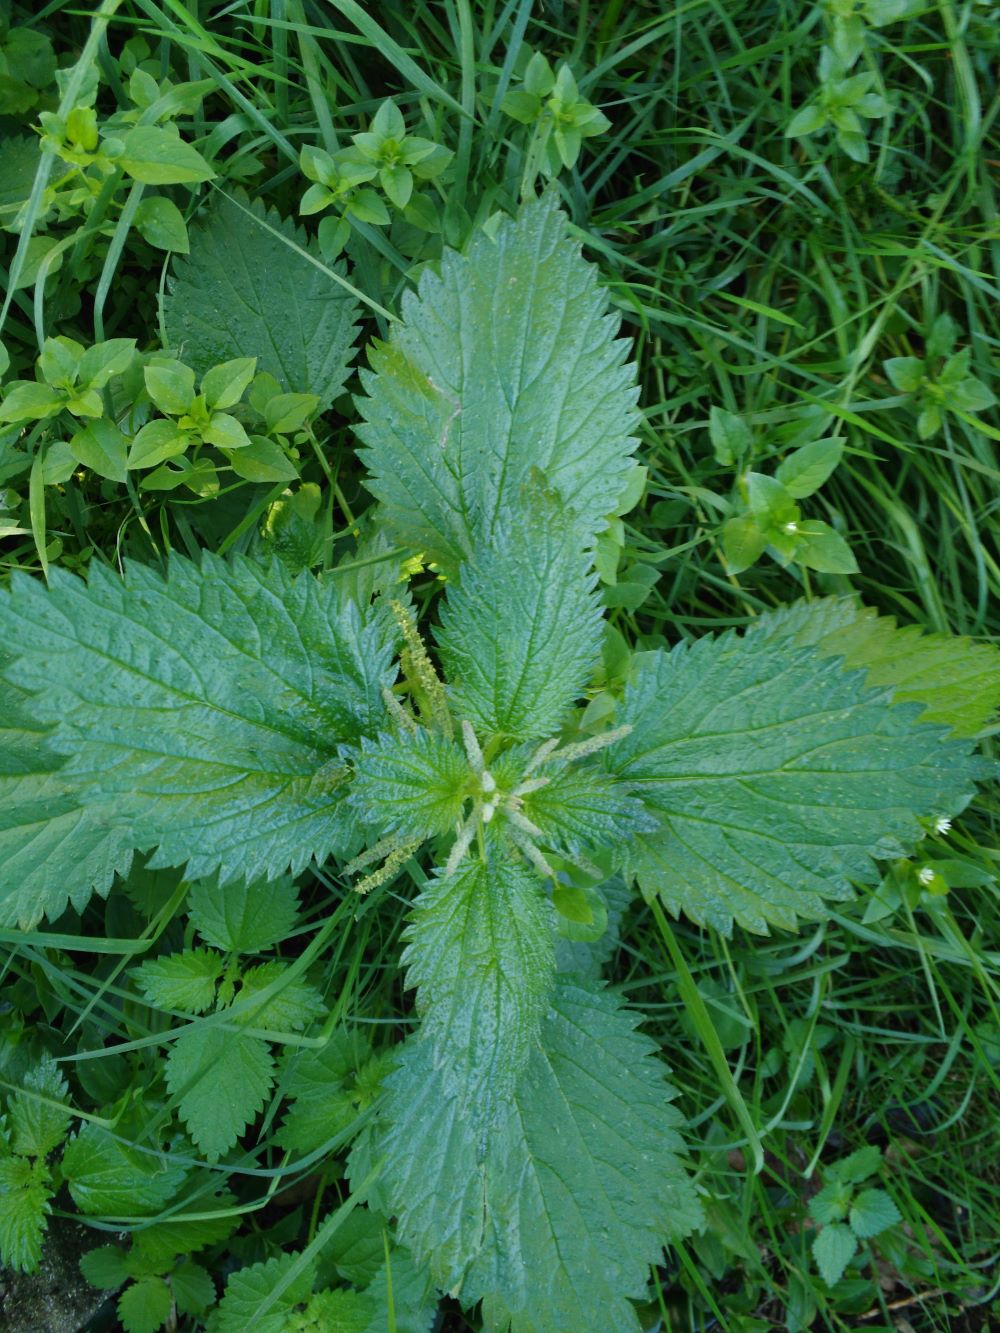 Herba do cego - Urtica membranacea Poir.